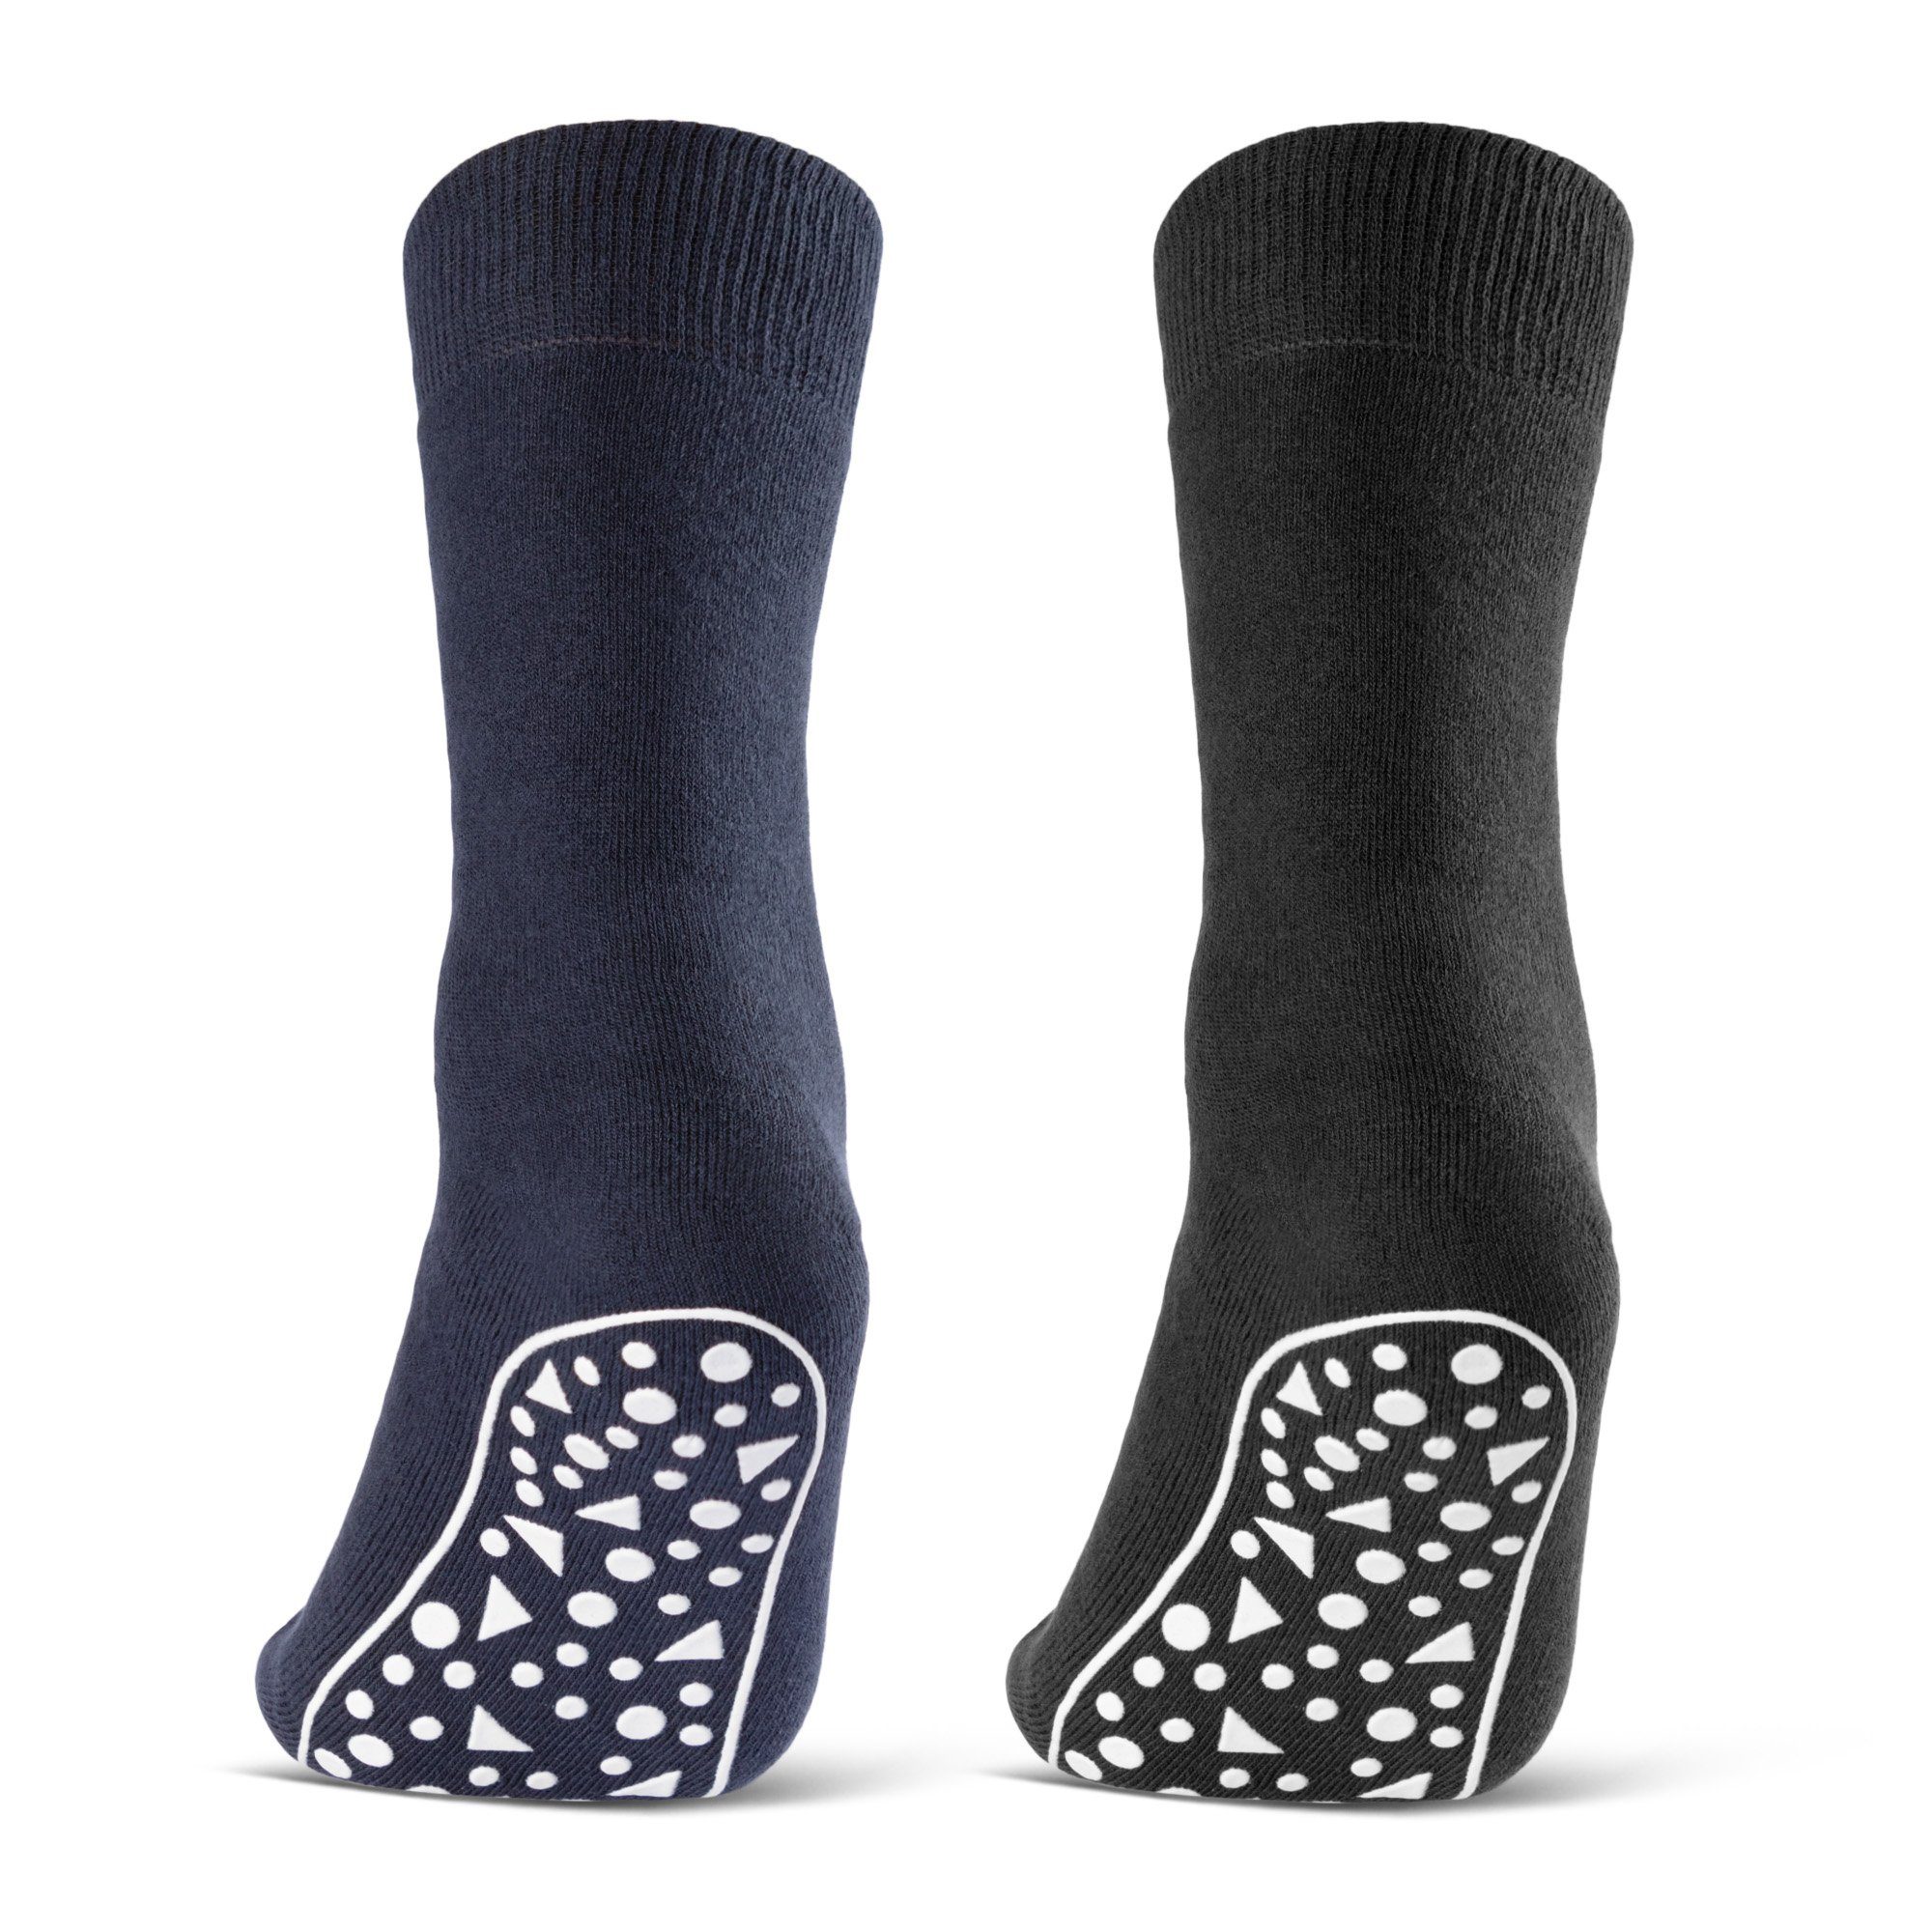 sockenkauf24 ABS-Socken 2, 4 oder 6 Paar Damen & Herren Anti Rutsch Socken Baumwolle (Schwarz, Blau, Grau, 2-Paar, 43-46) Stoppersocken Noppensocken - 21395 WP